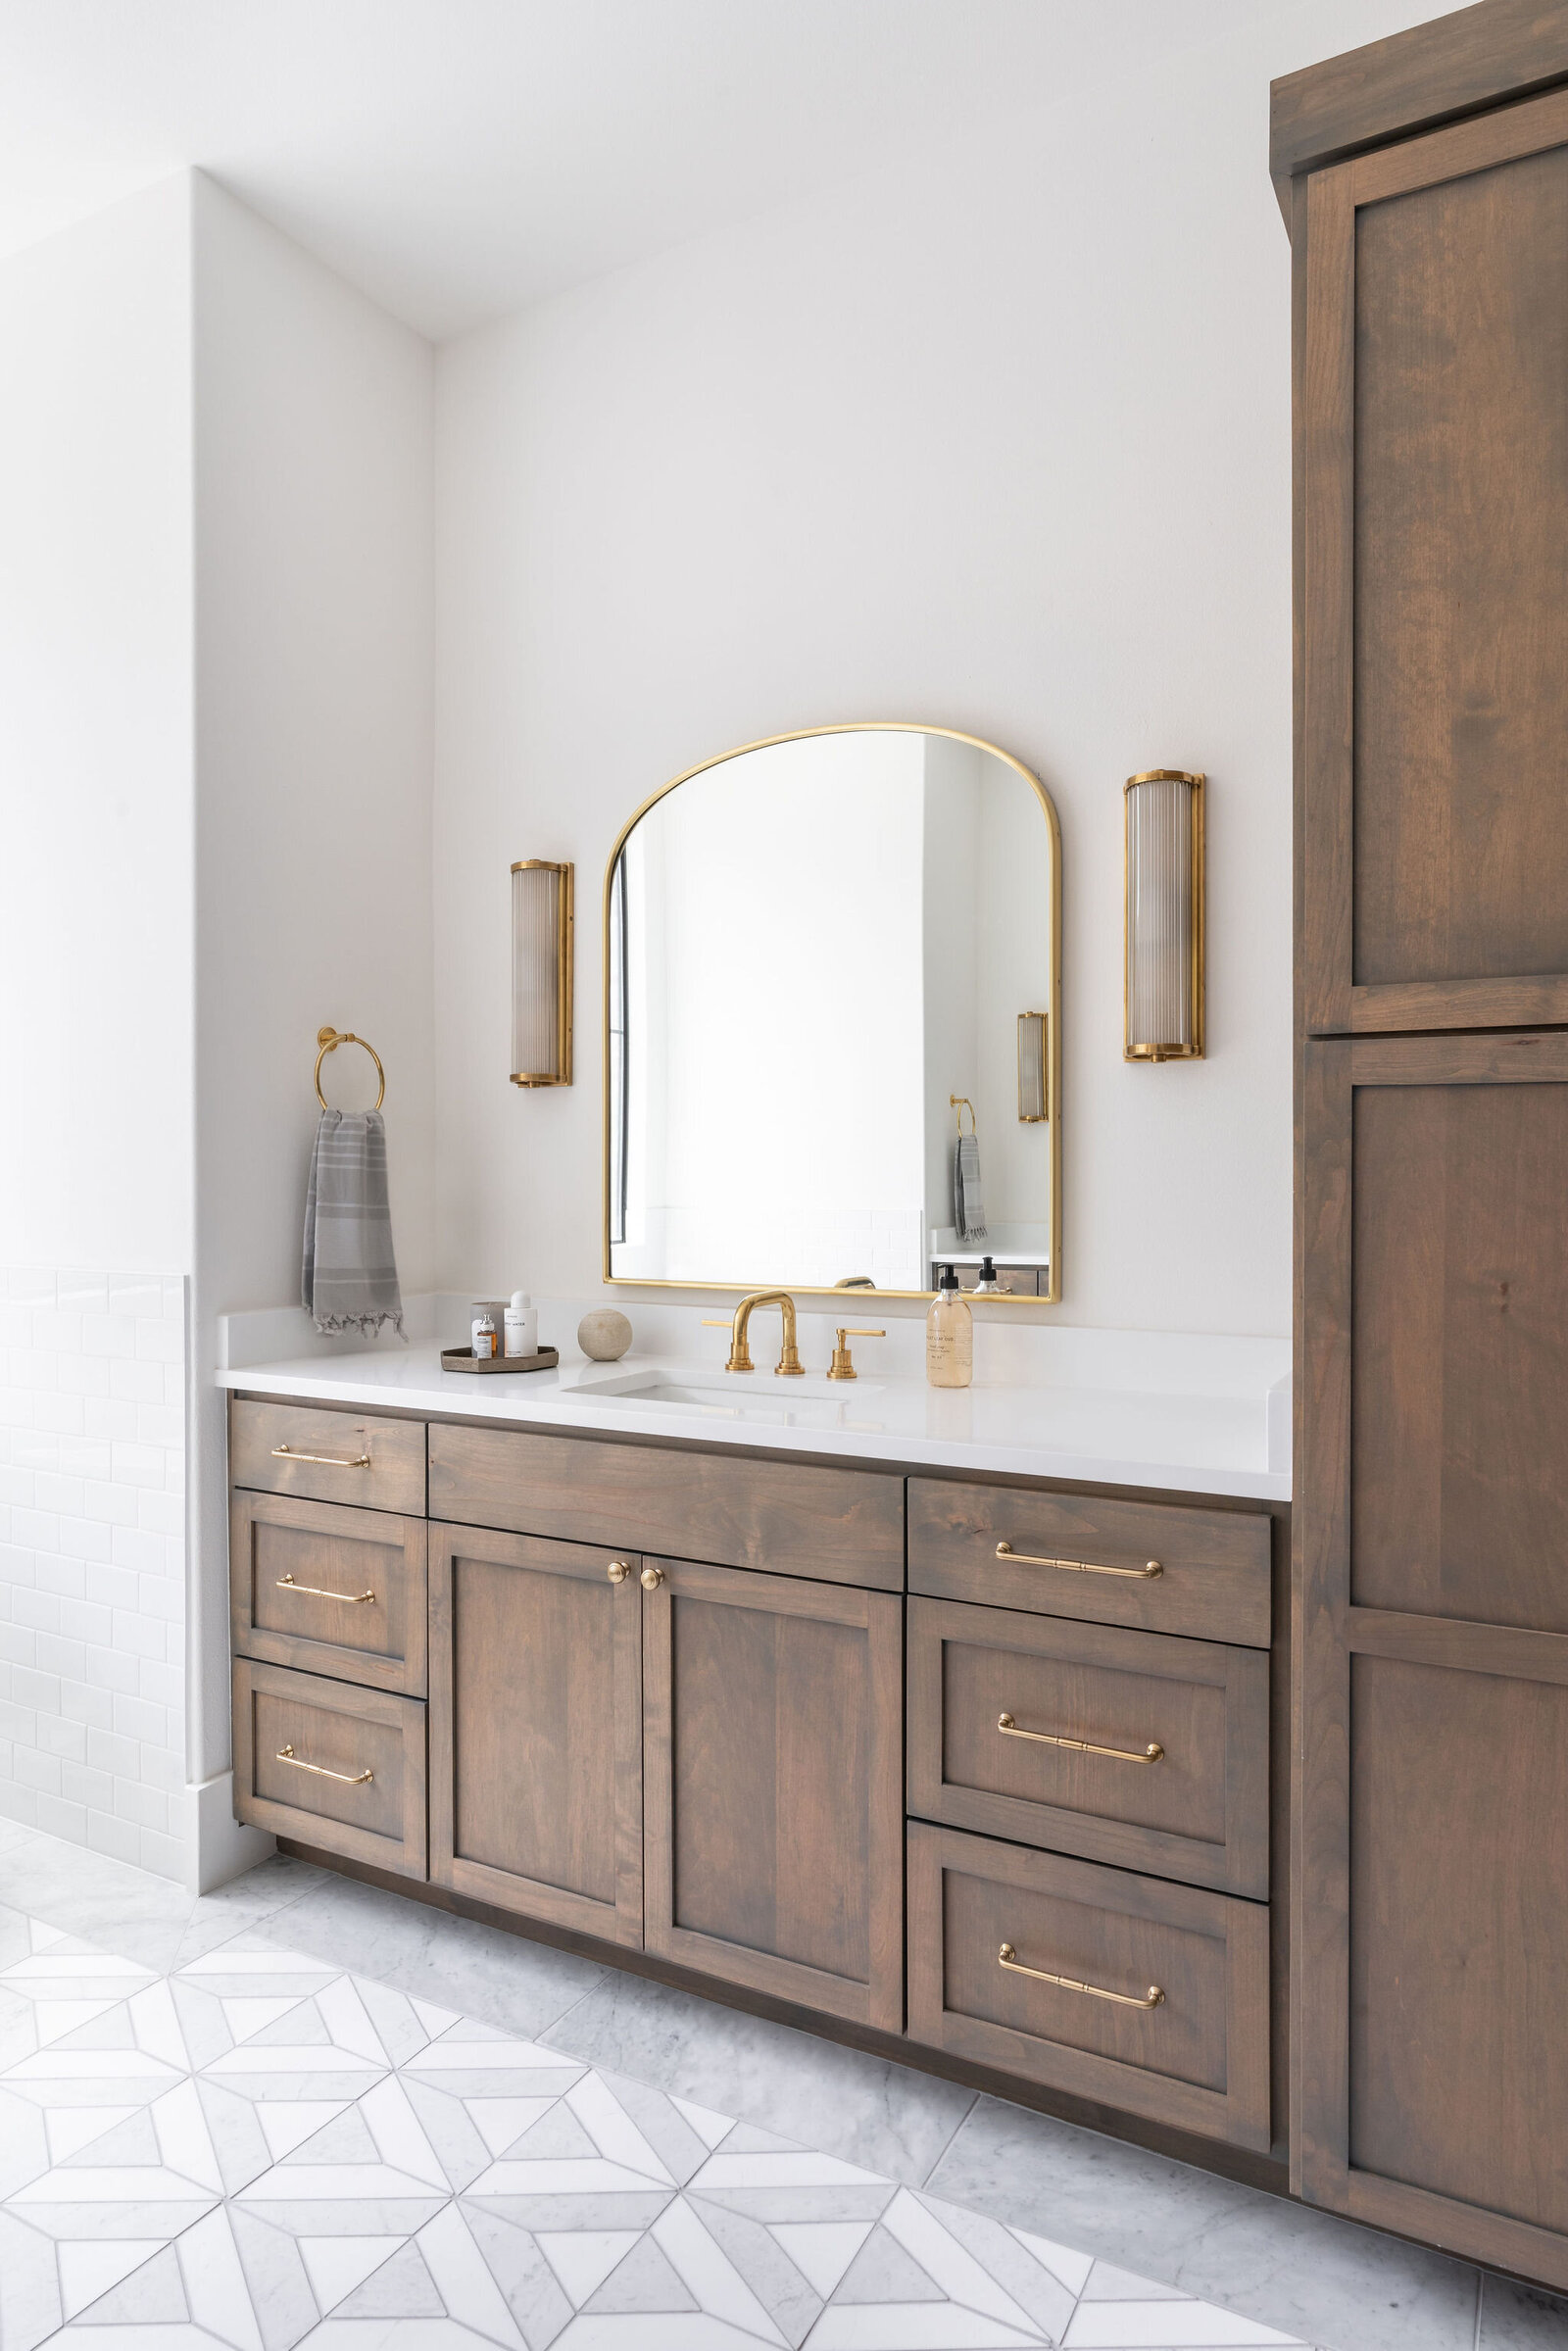 NuelaDesign_Wood Vanity Bathroom Design with Gold Mirror